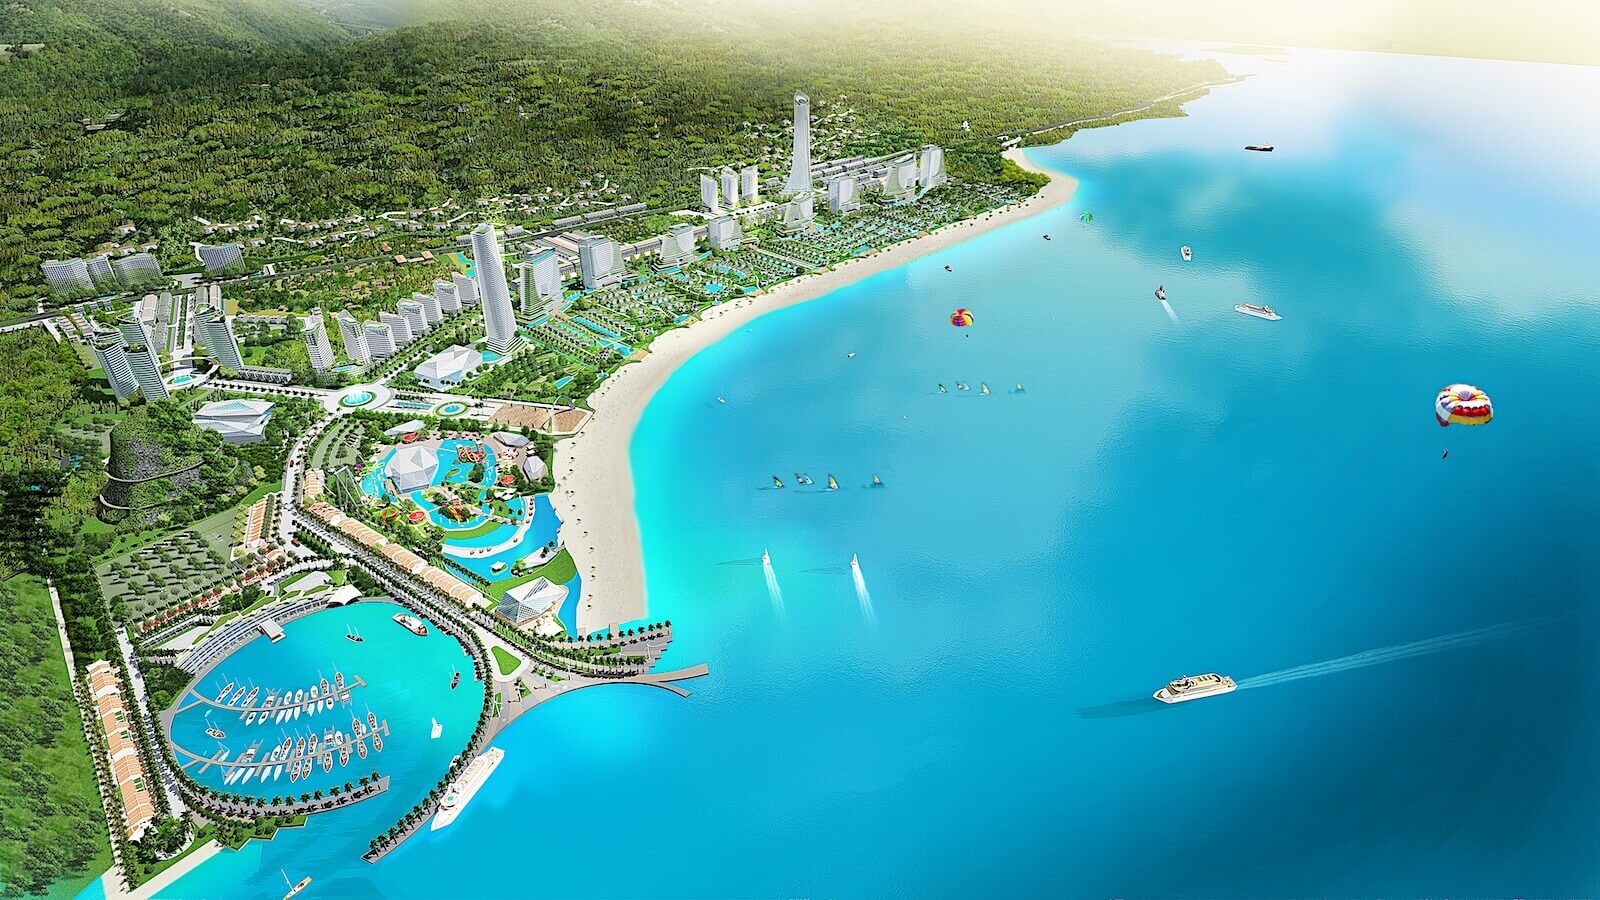 Sonasea Vân Đồn Harbor City - Đánh giá & Bảng giá 2022 ? | VNREP